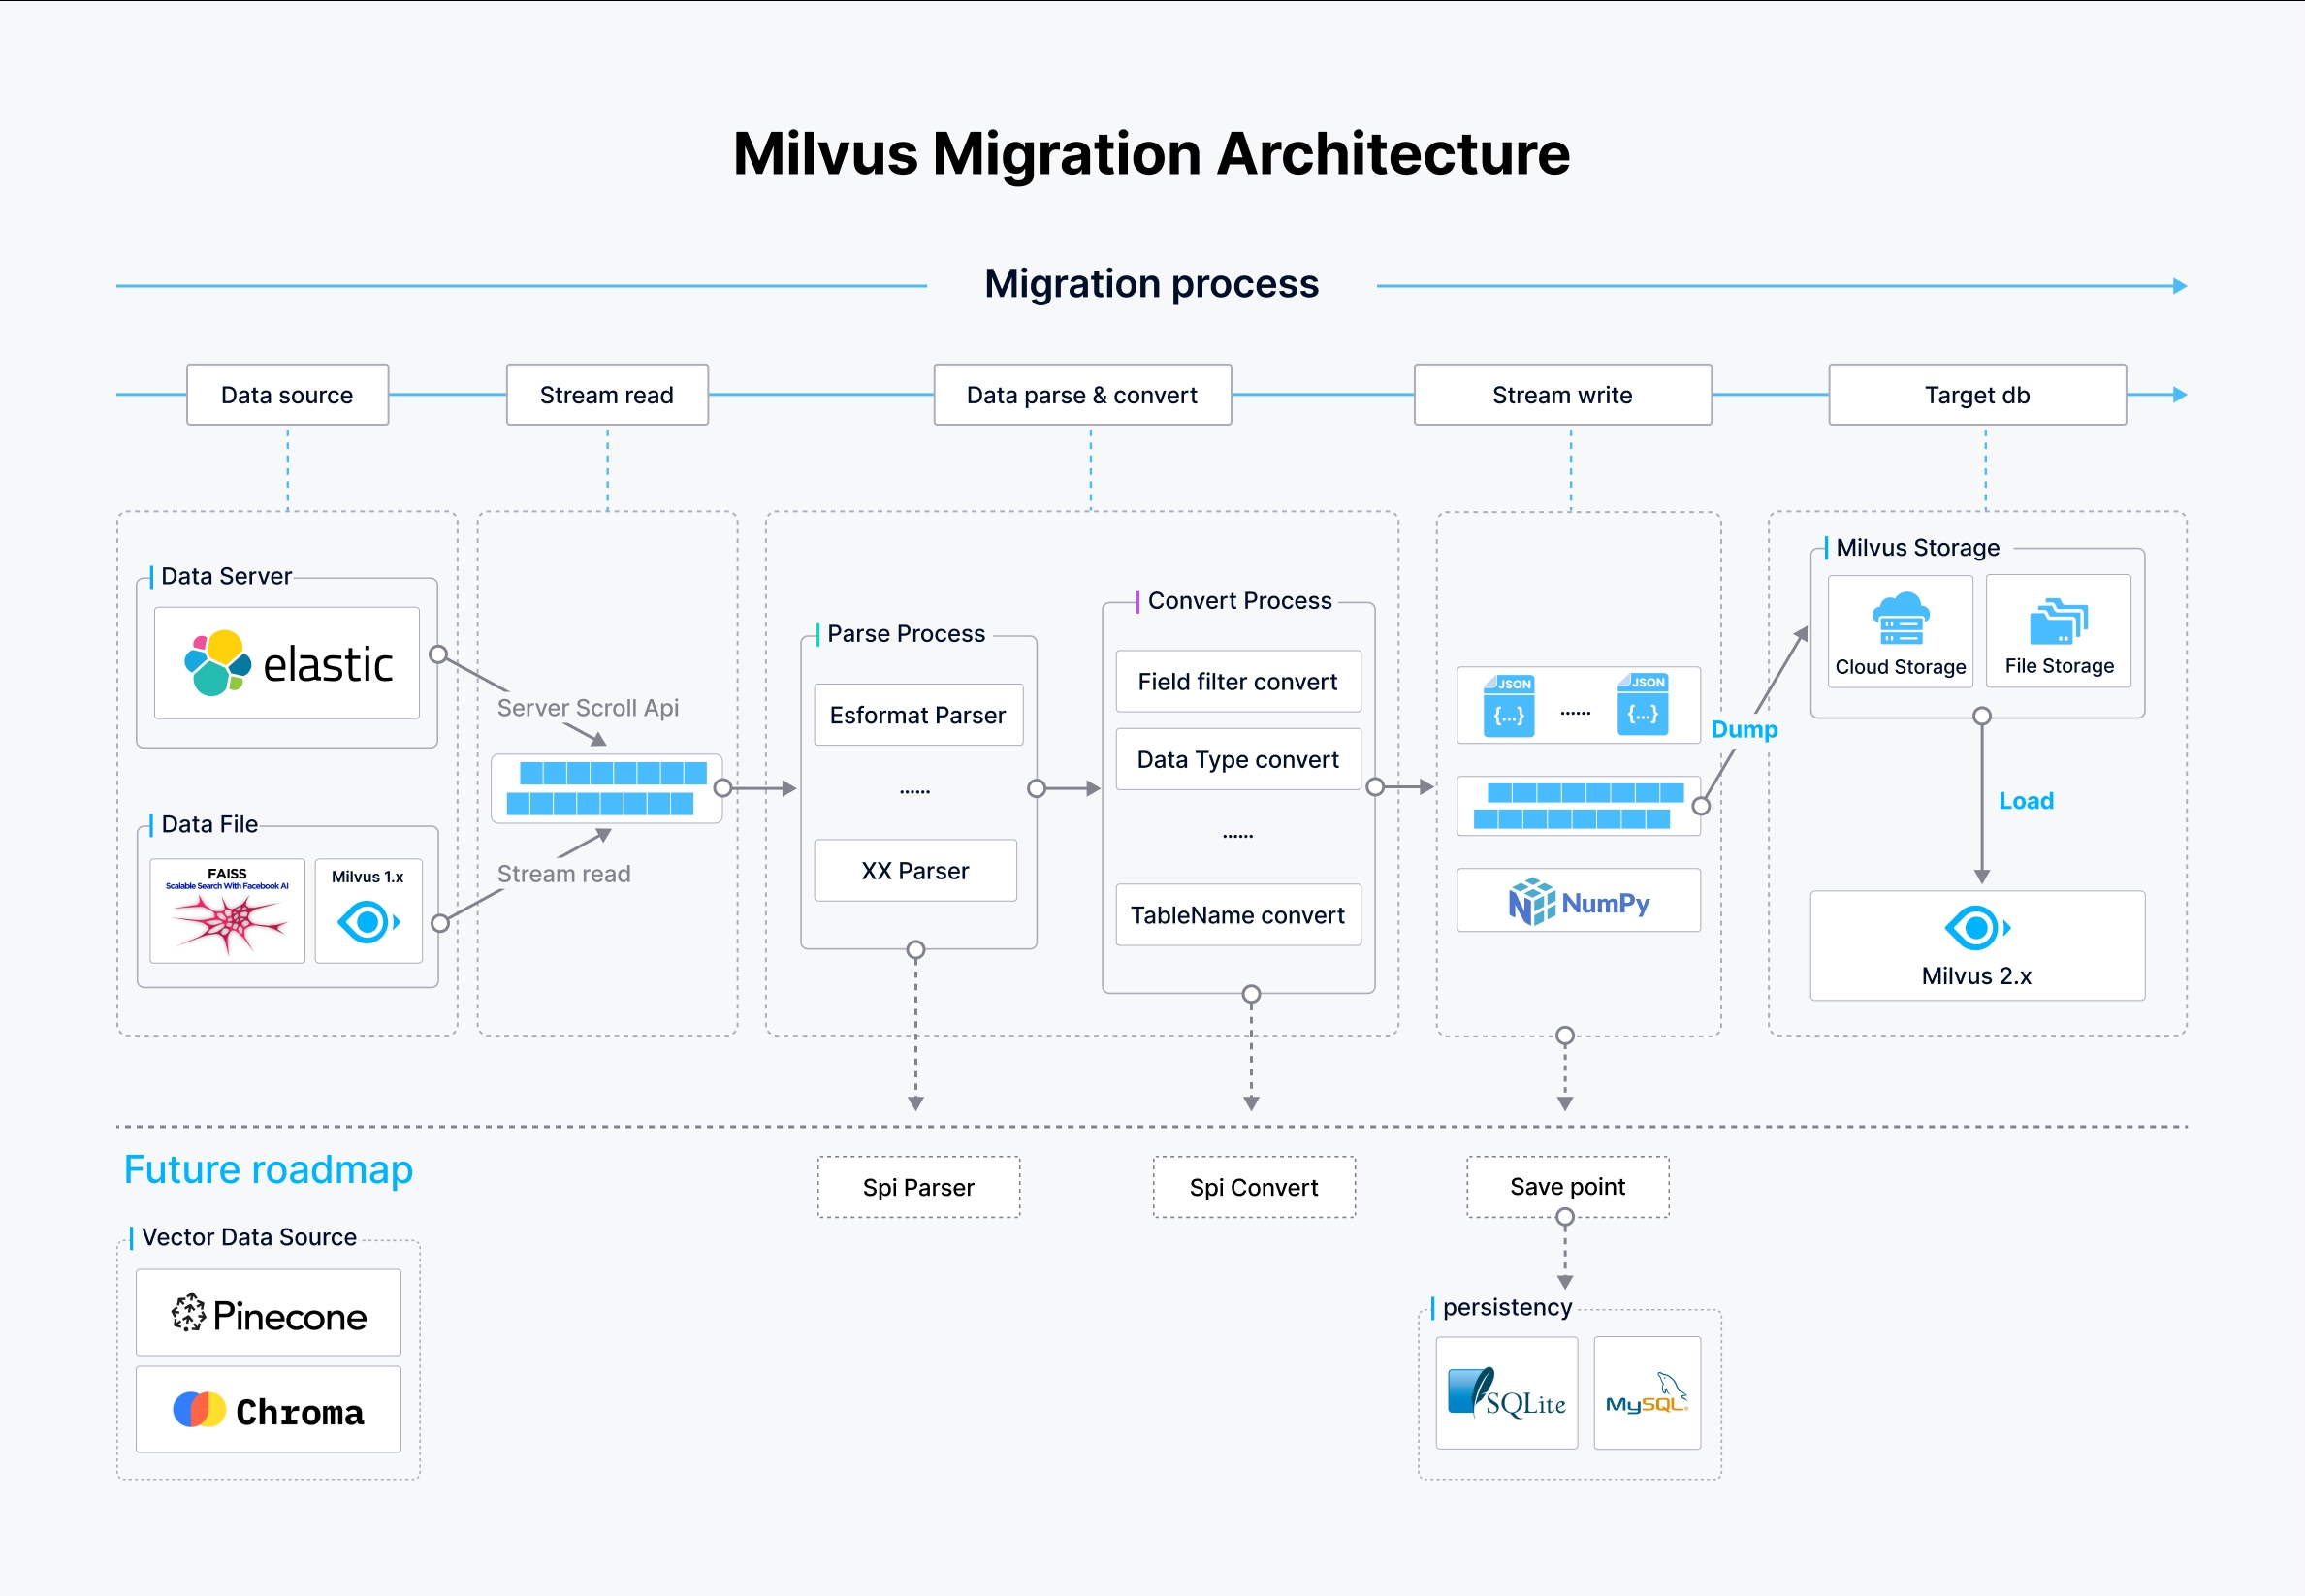 Milvus-migration architecture